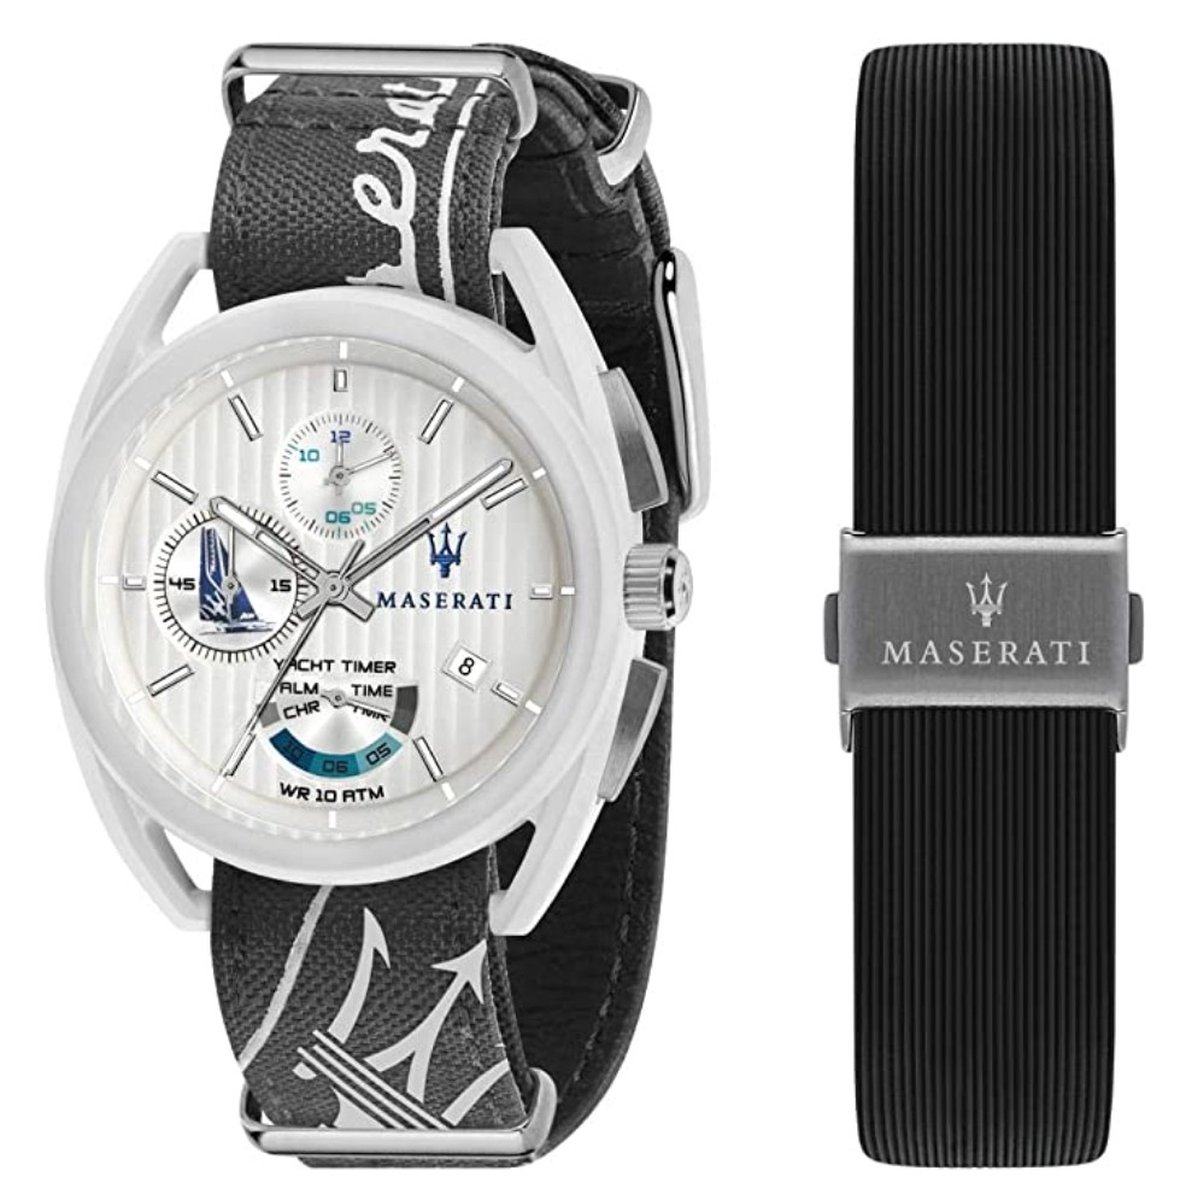 Maserati- Horloge - Zwart-Witte band - Met extra band - Model Yacht Timer